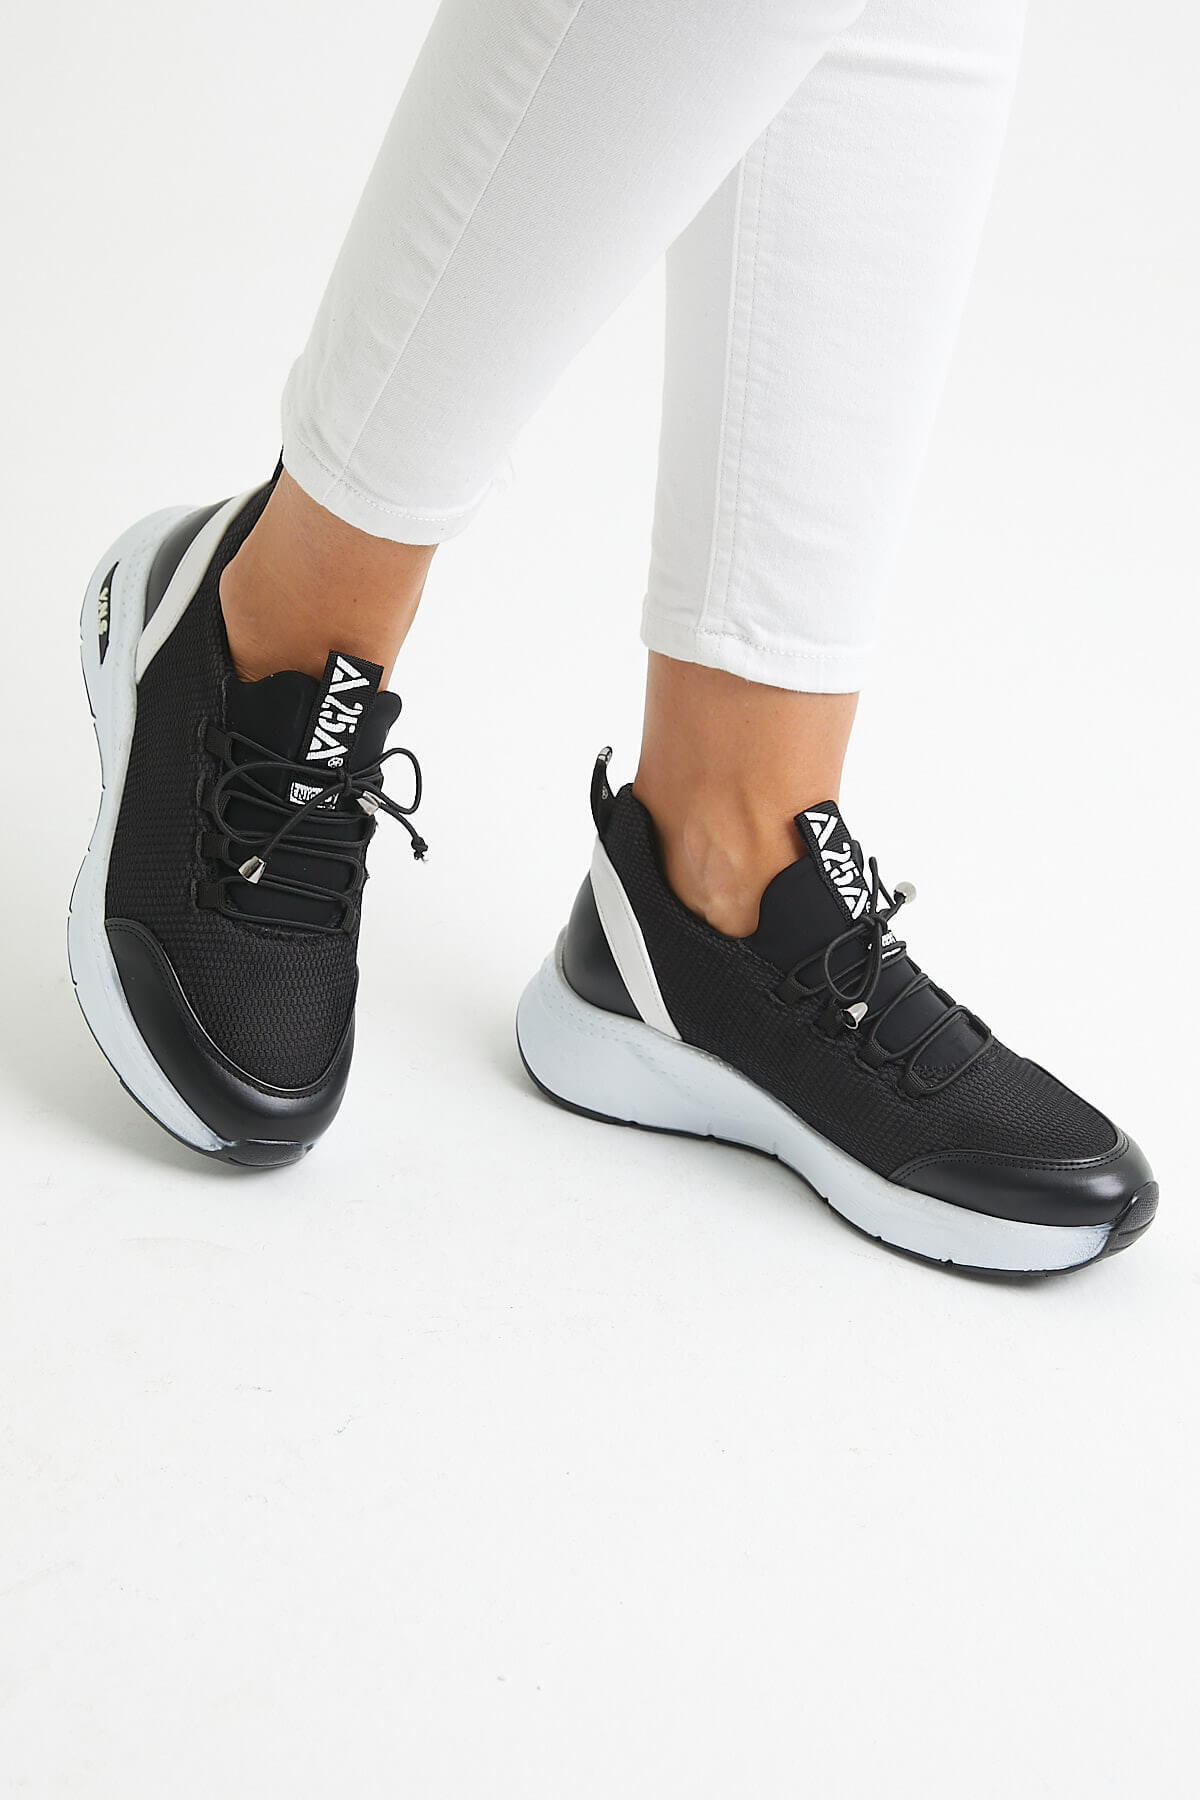 Kadın Sneakers Siyah 2115004Y